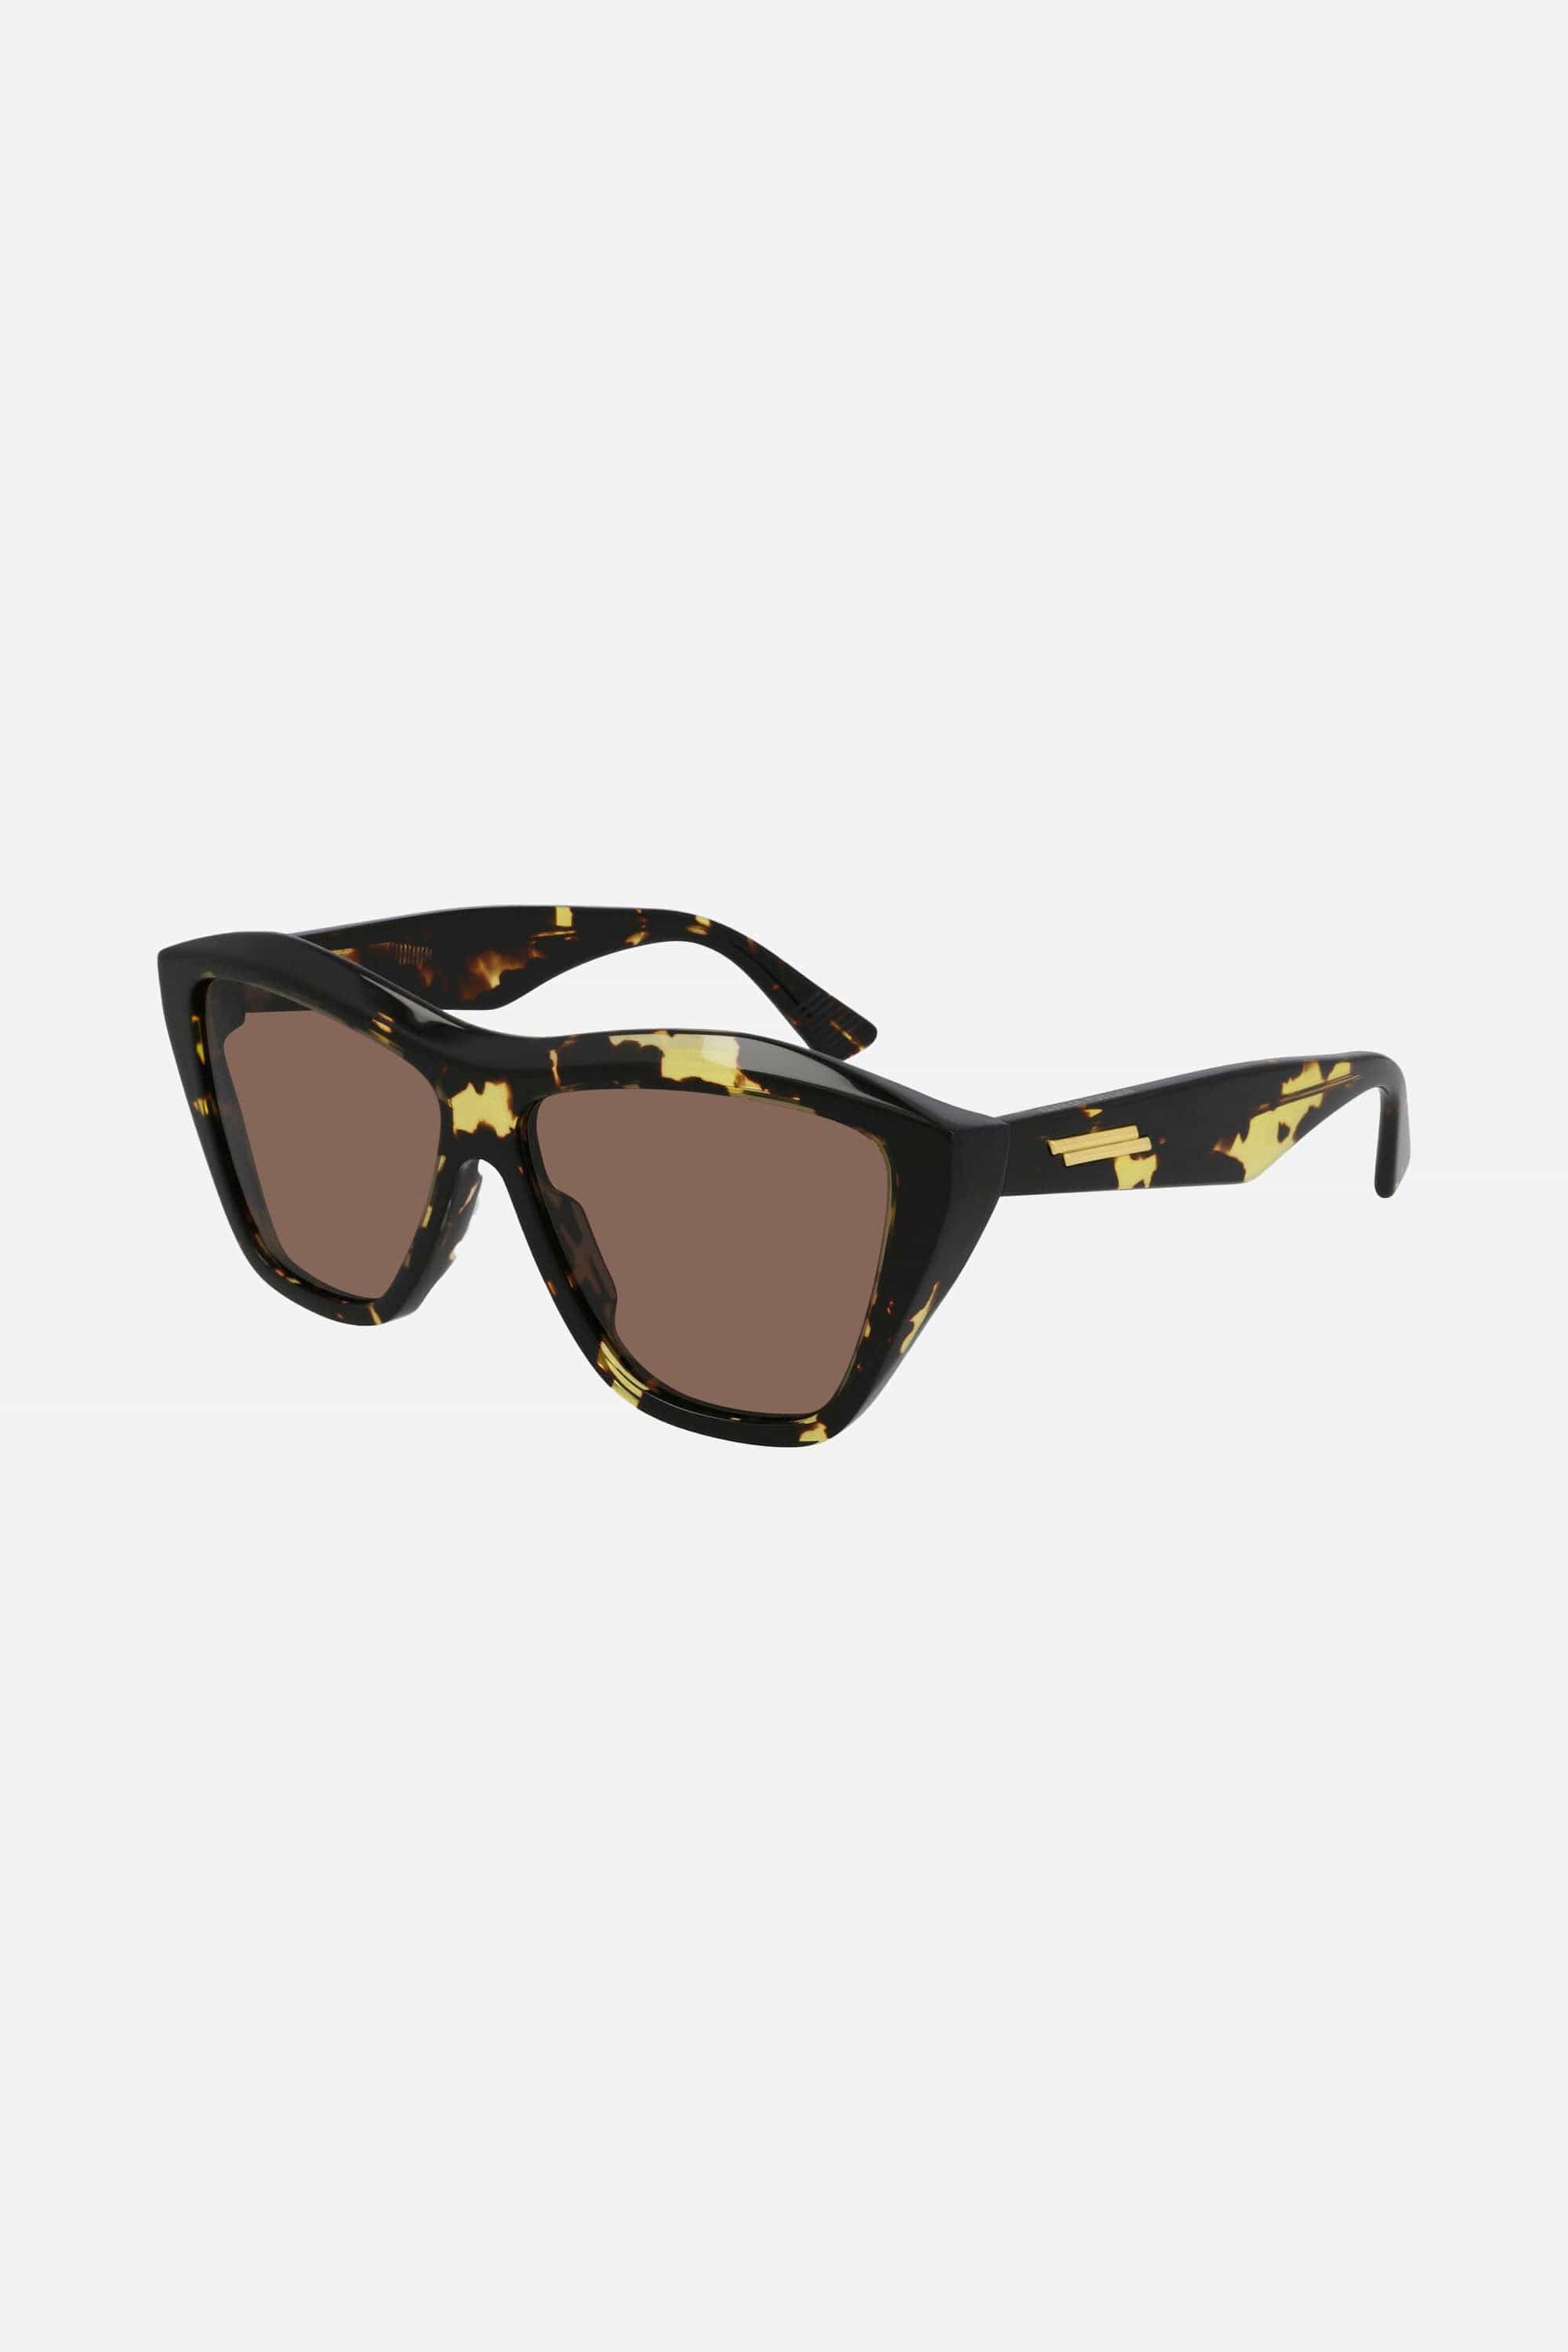 Bottega Veneta havana squared sunglasses - Eyewear Club